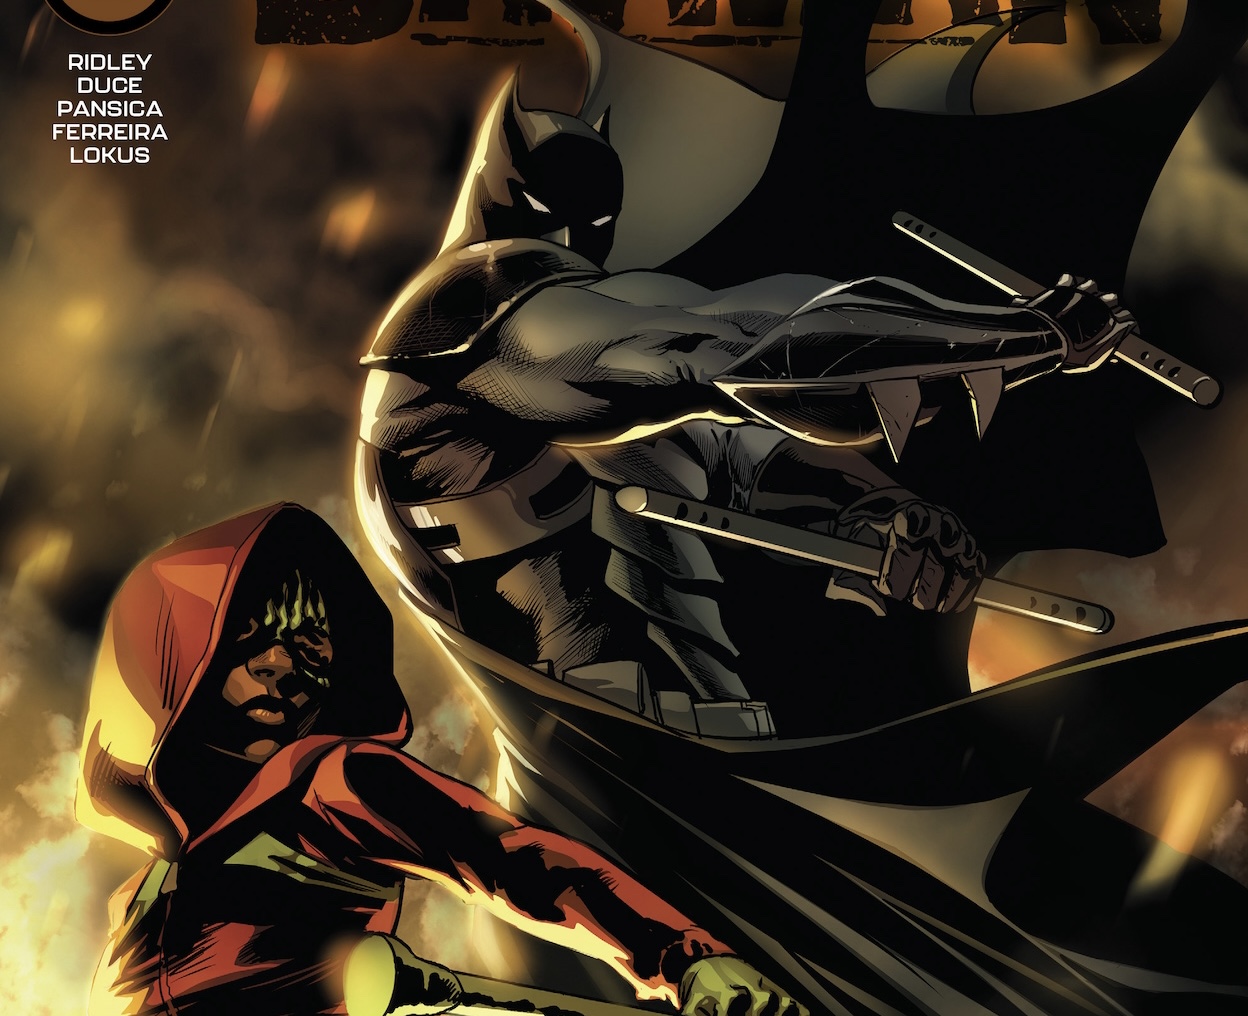 'I am Batman' #17 strikes the perfect balance between drama and action